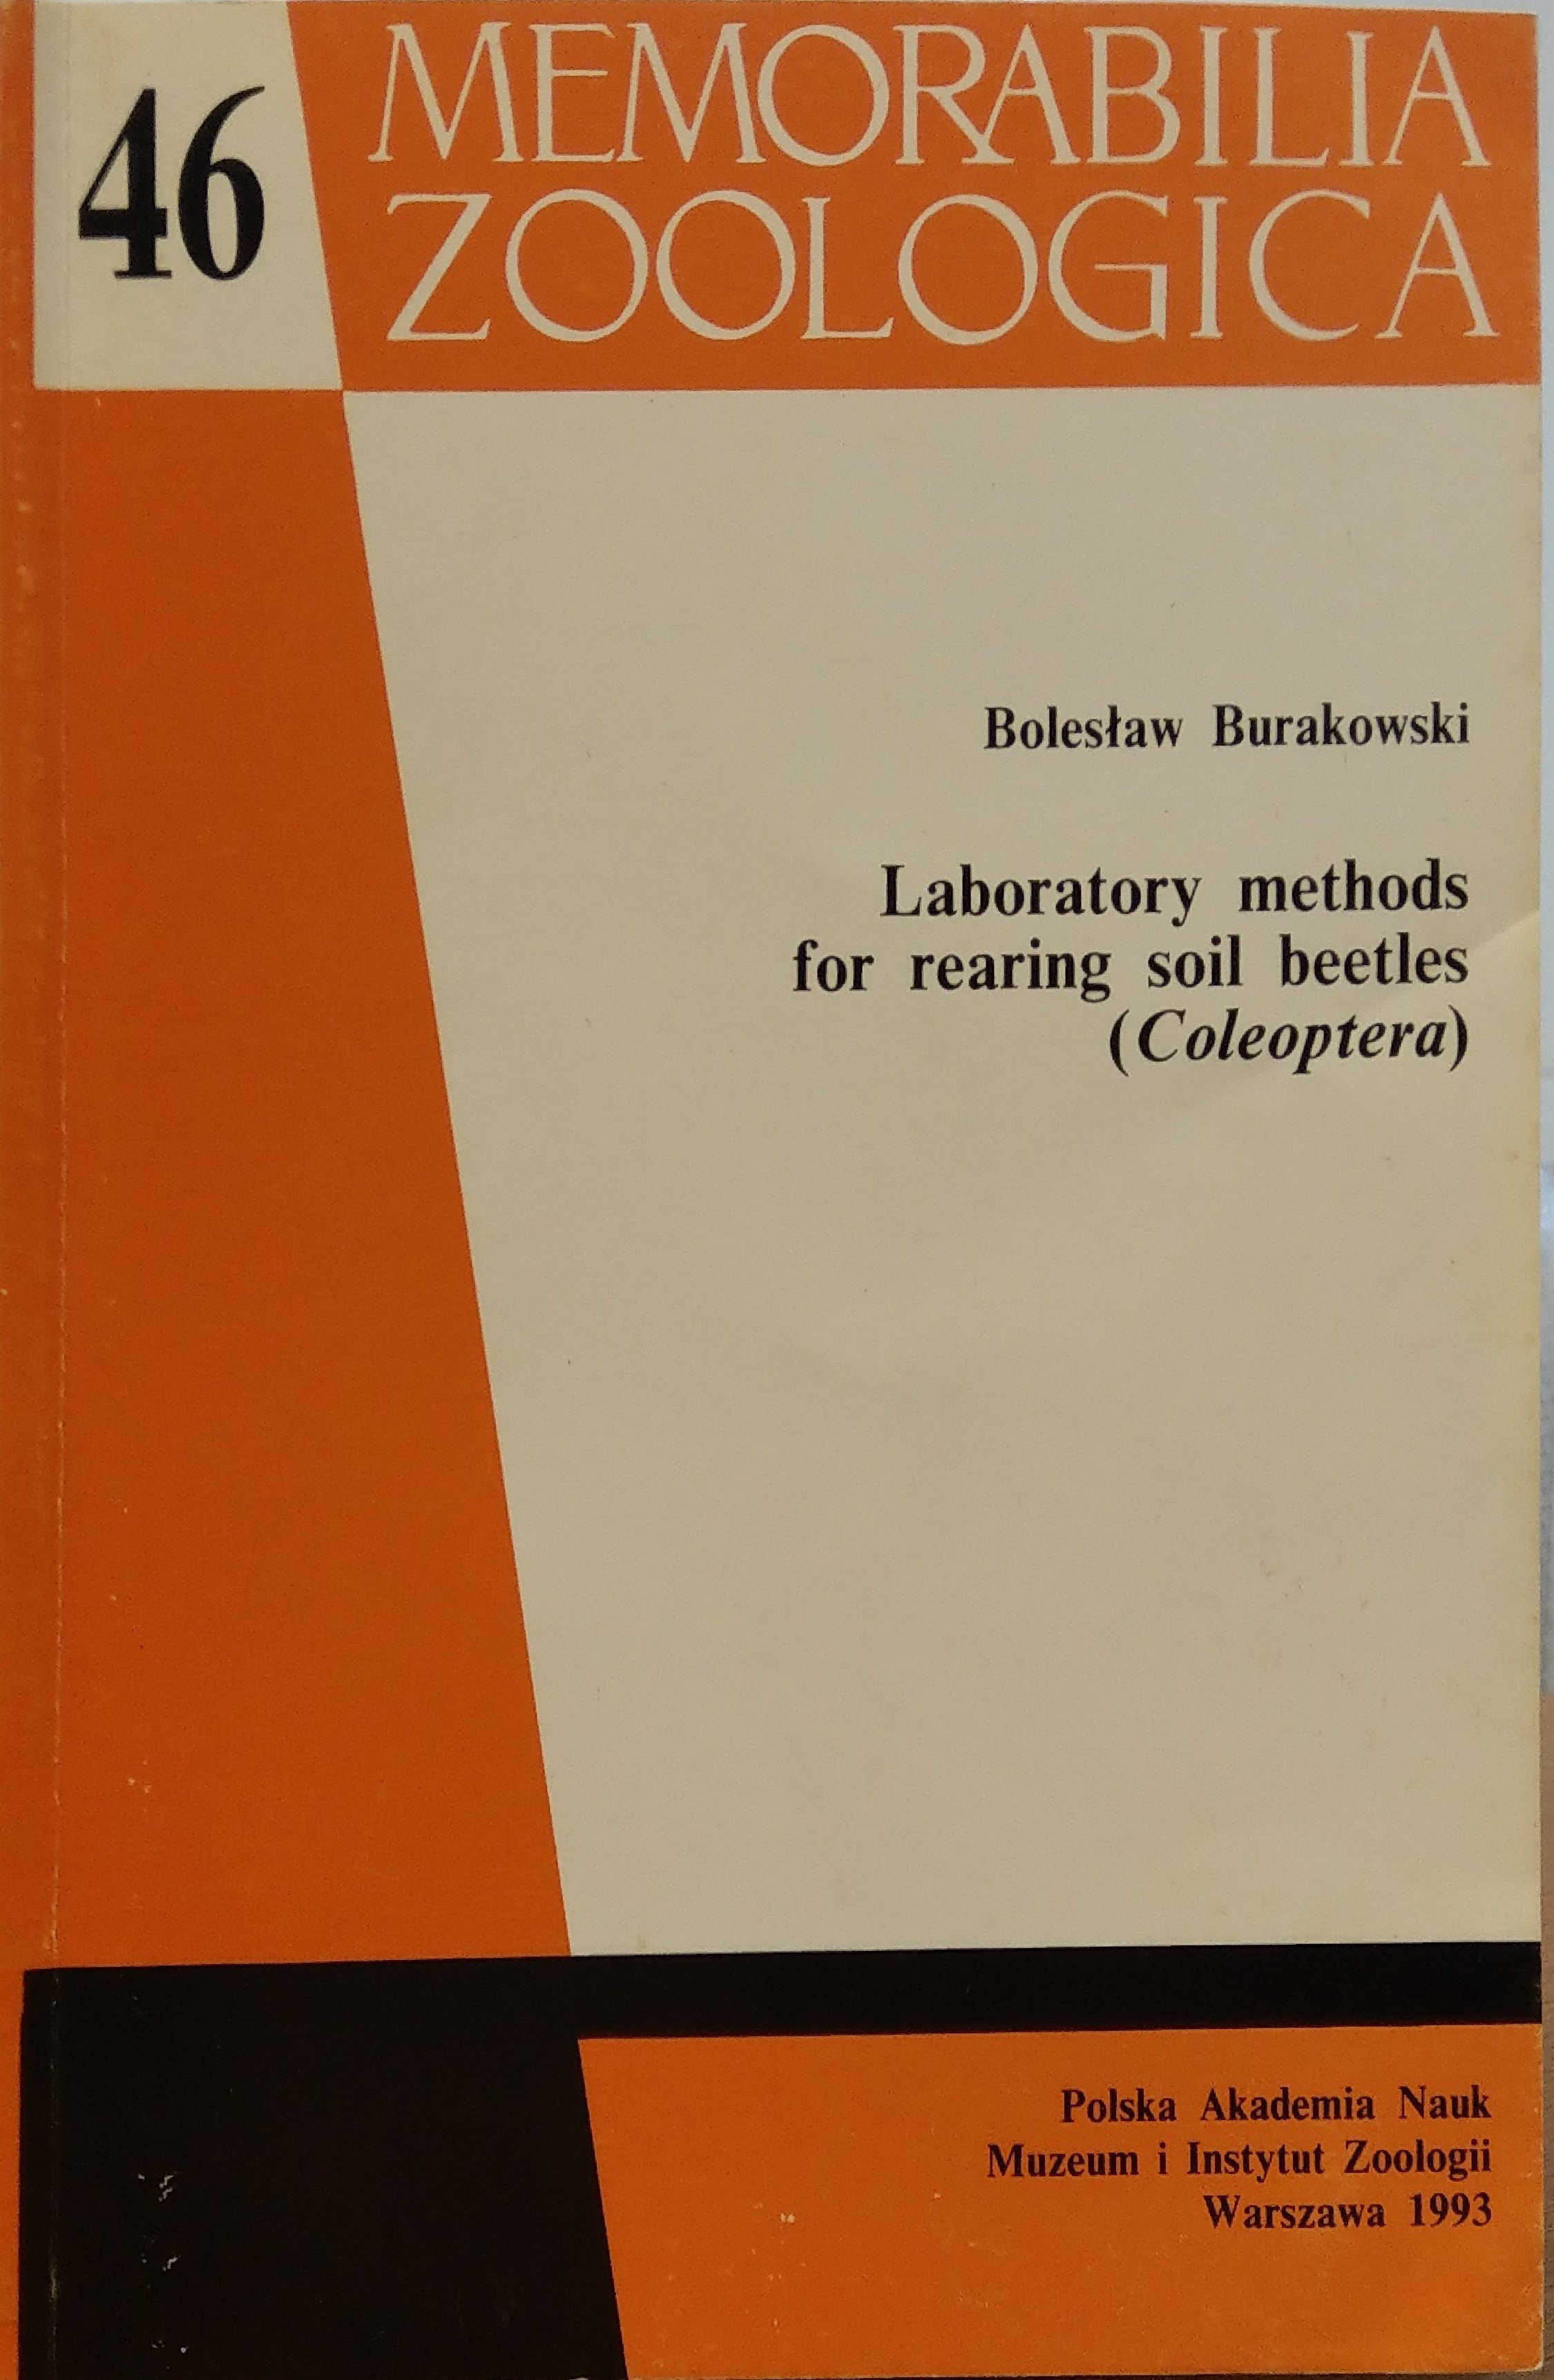 Boleslaw Burakowski: Laboratory methods for rearing soil beetles (Coleoptera) (Rippl-Rónai Múzeum CC BY-NC-ND)